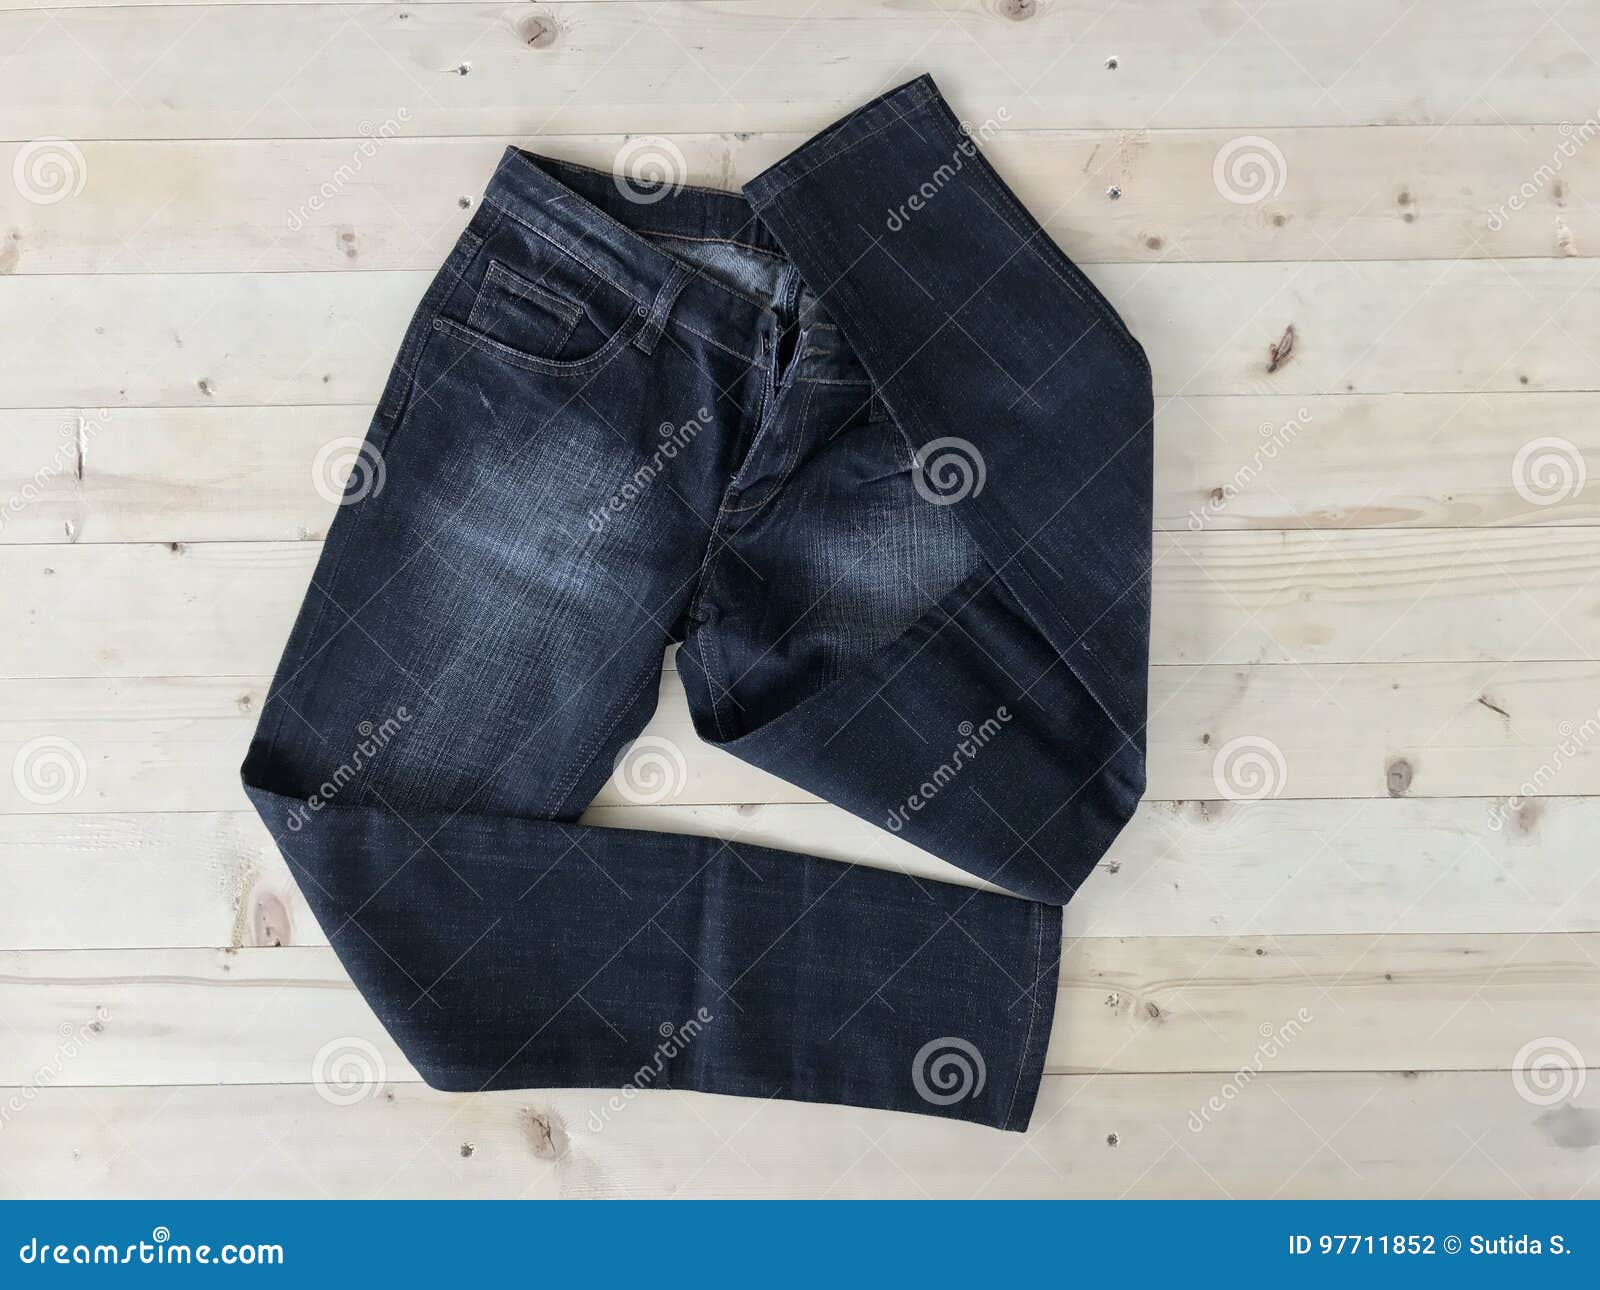 Jean pants on wood floor stock photo. Image of denim - 97711852